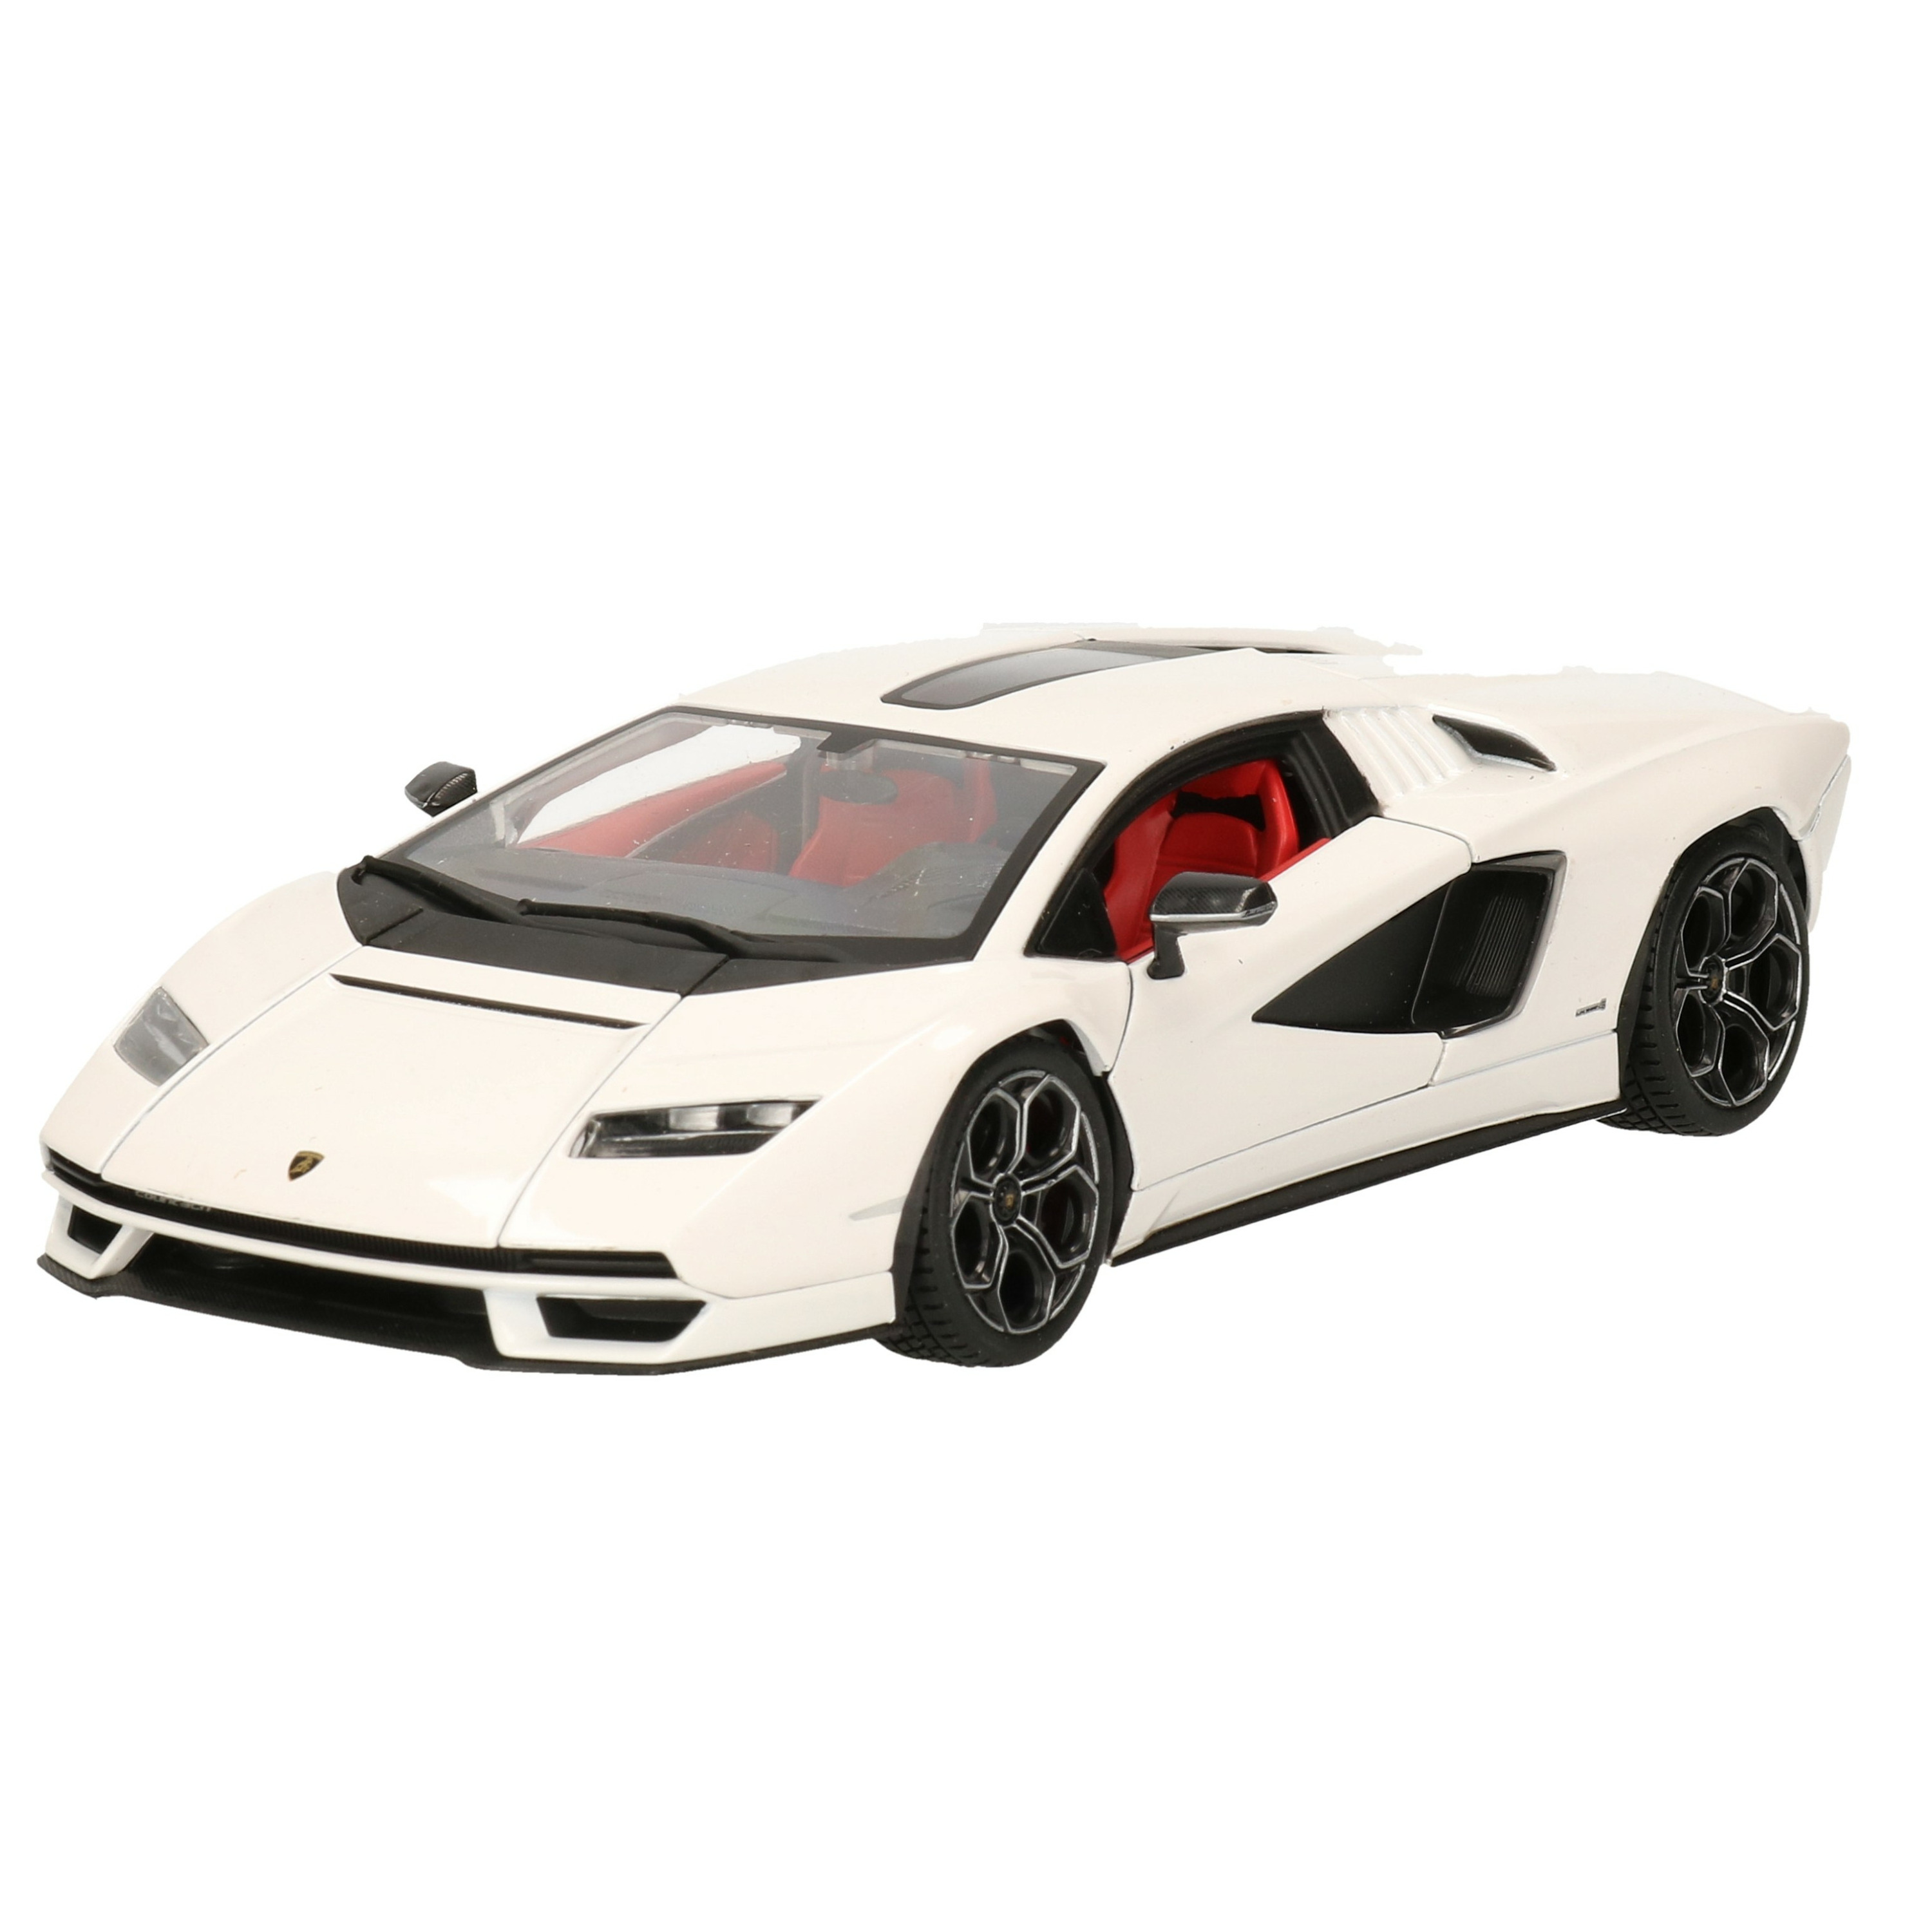 Modelauto-speelgoedauto Lamborghini Countach schaal 1:24-20 x 8 x 5 cm